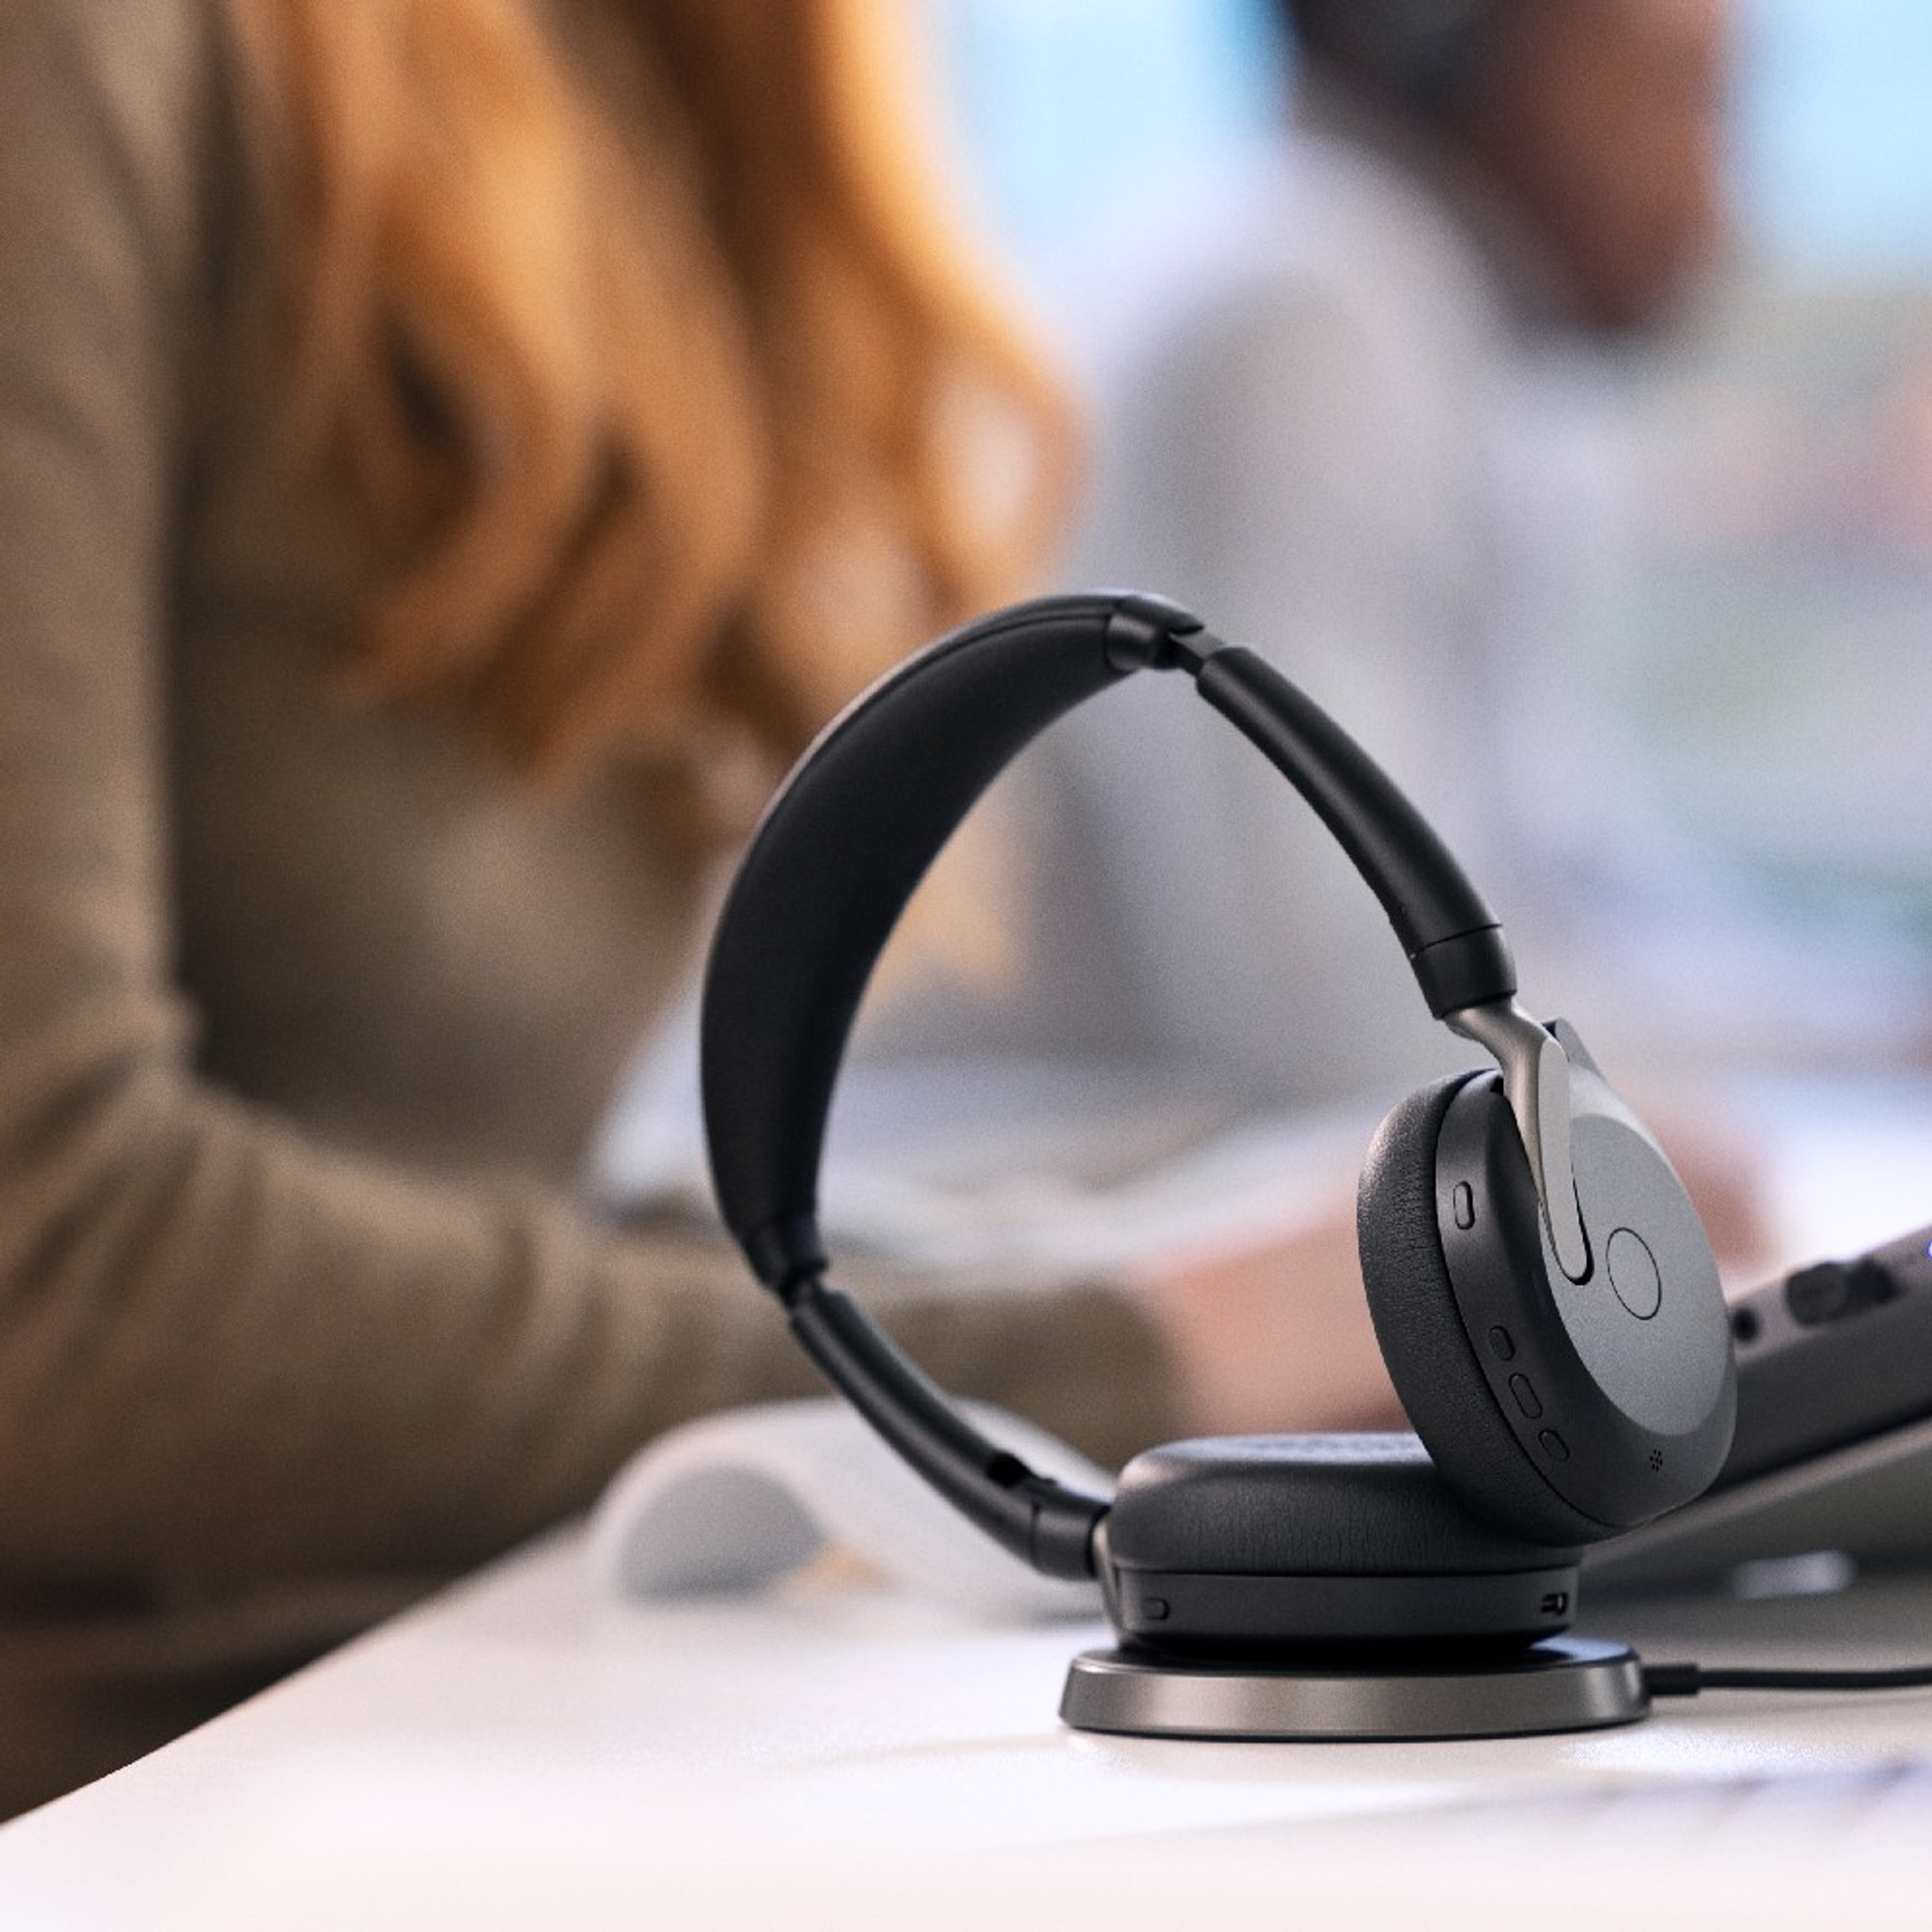 Jabra Evolve2 65 Flex, Audio, Headphones & Headsets on Carousell